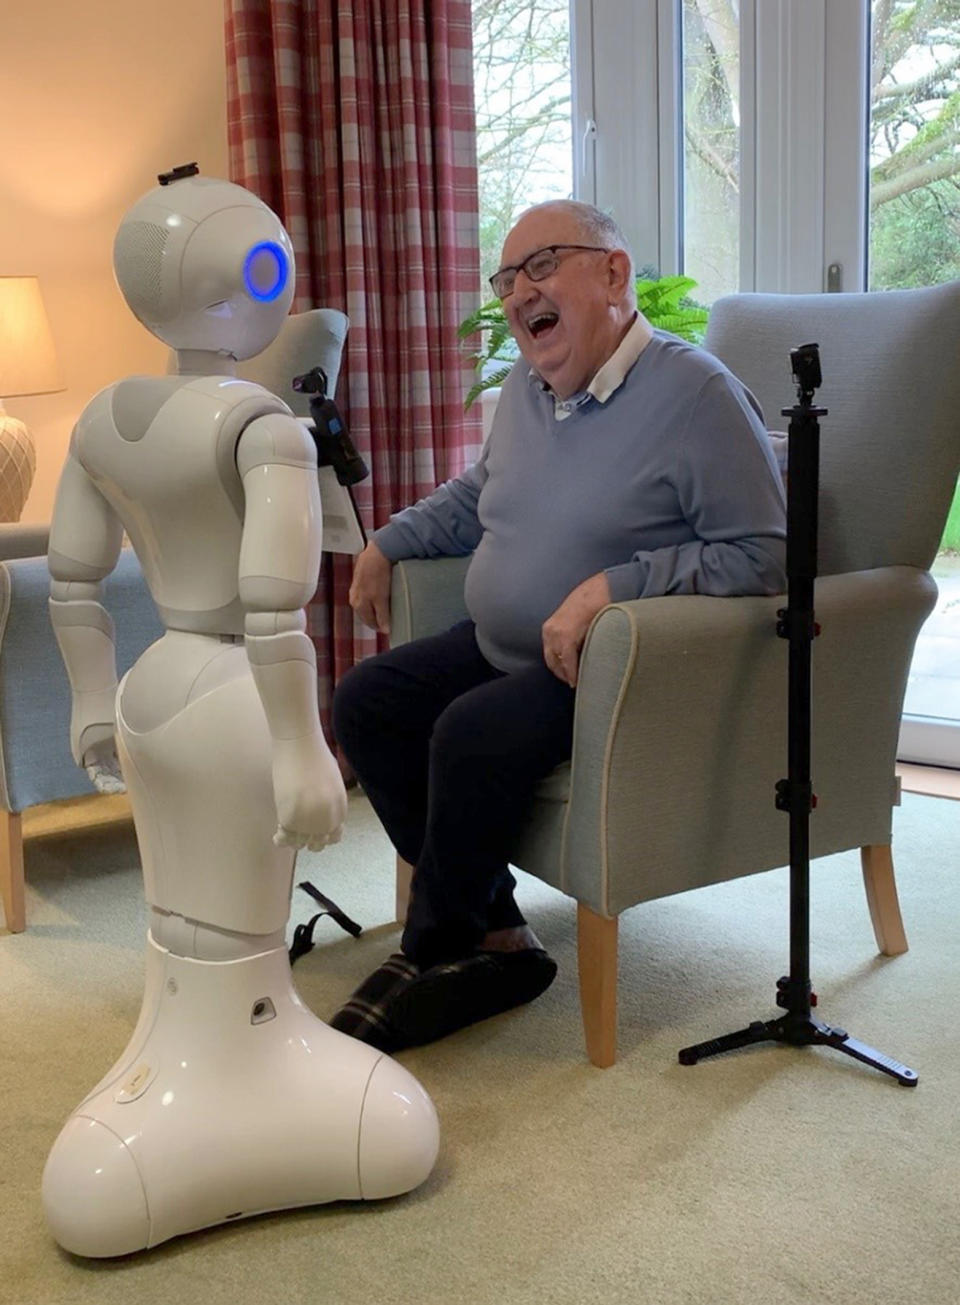 Pepper the robot with an elderly man (Photograph: PA)